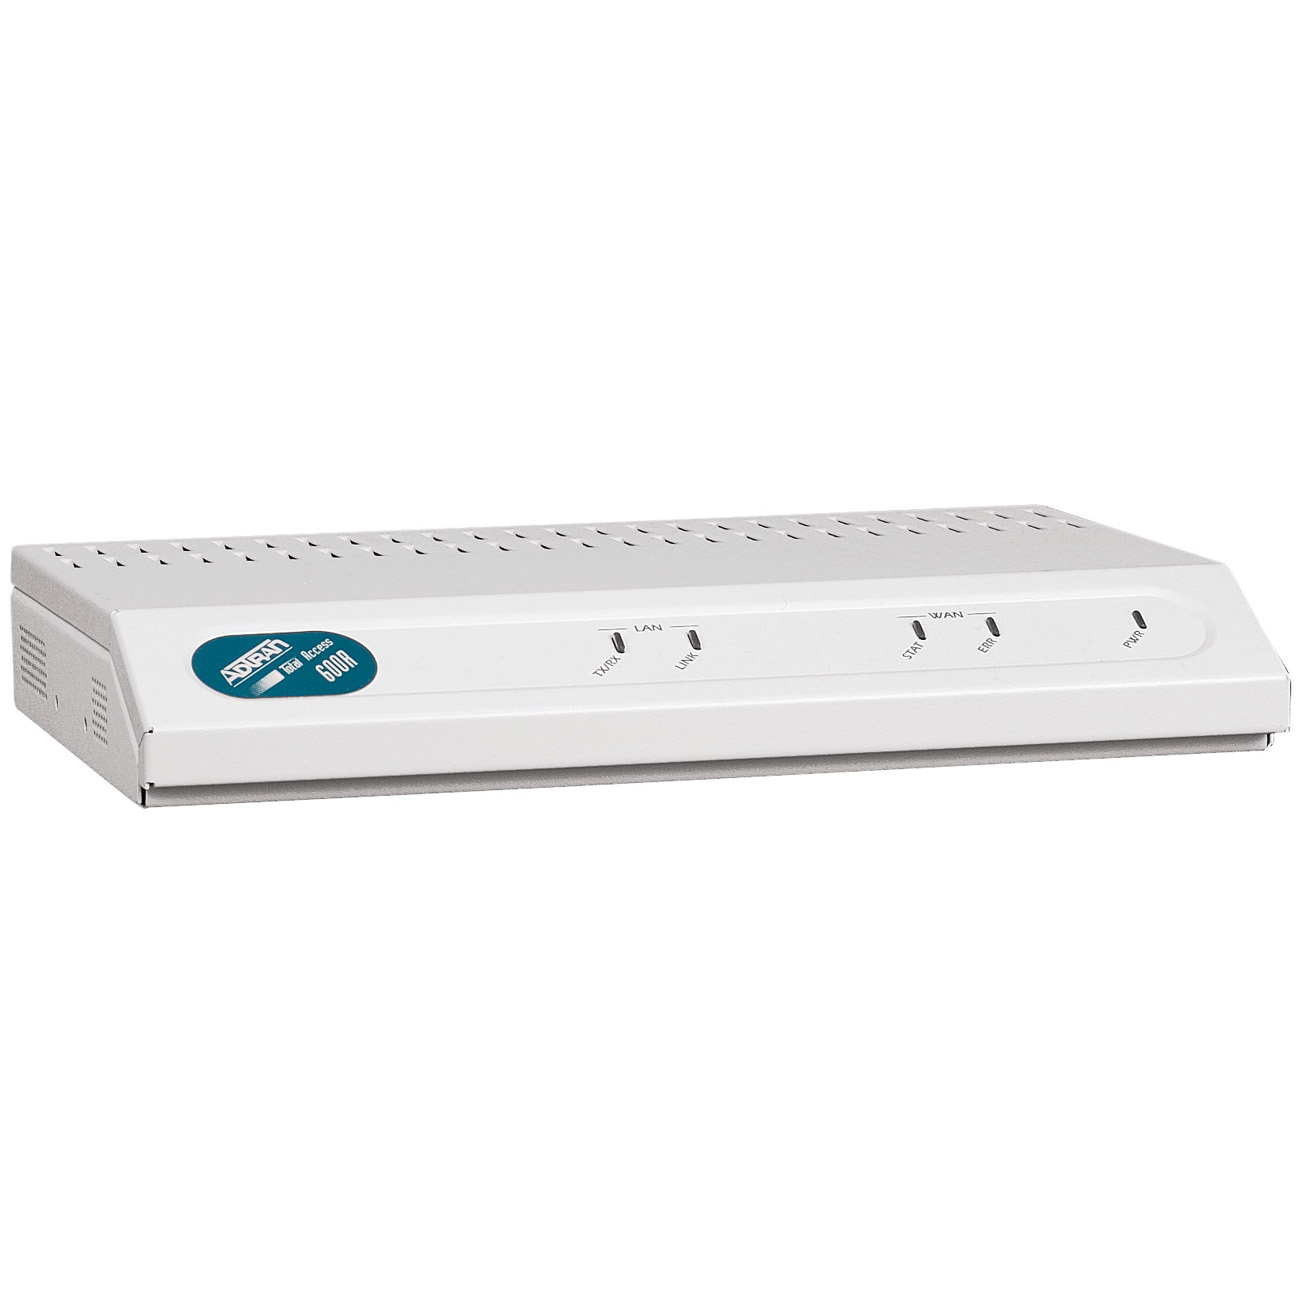 Adtran Total Access 600R Access Router - 1 x 10/100Base-TX LAN, 1